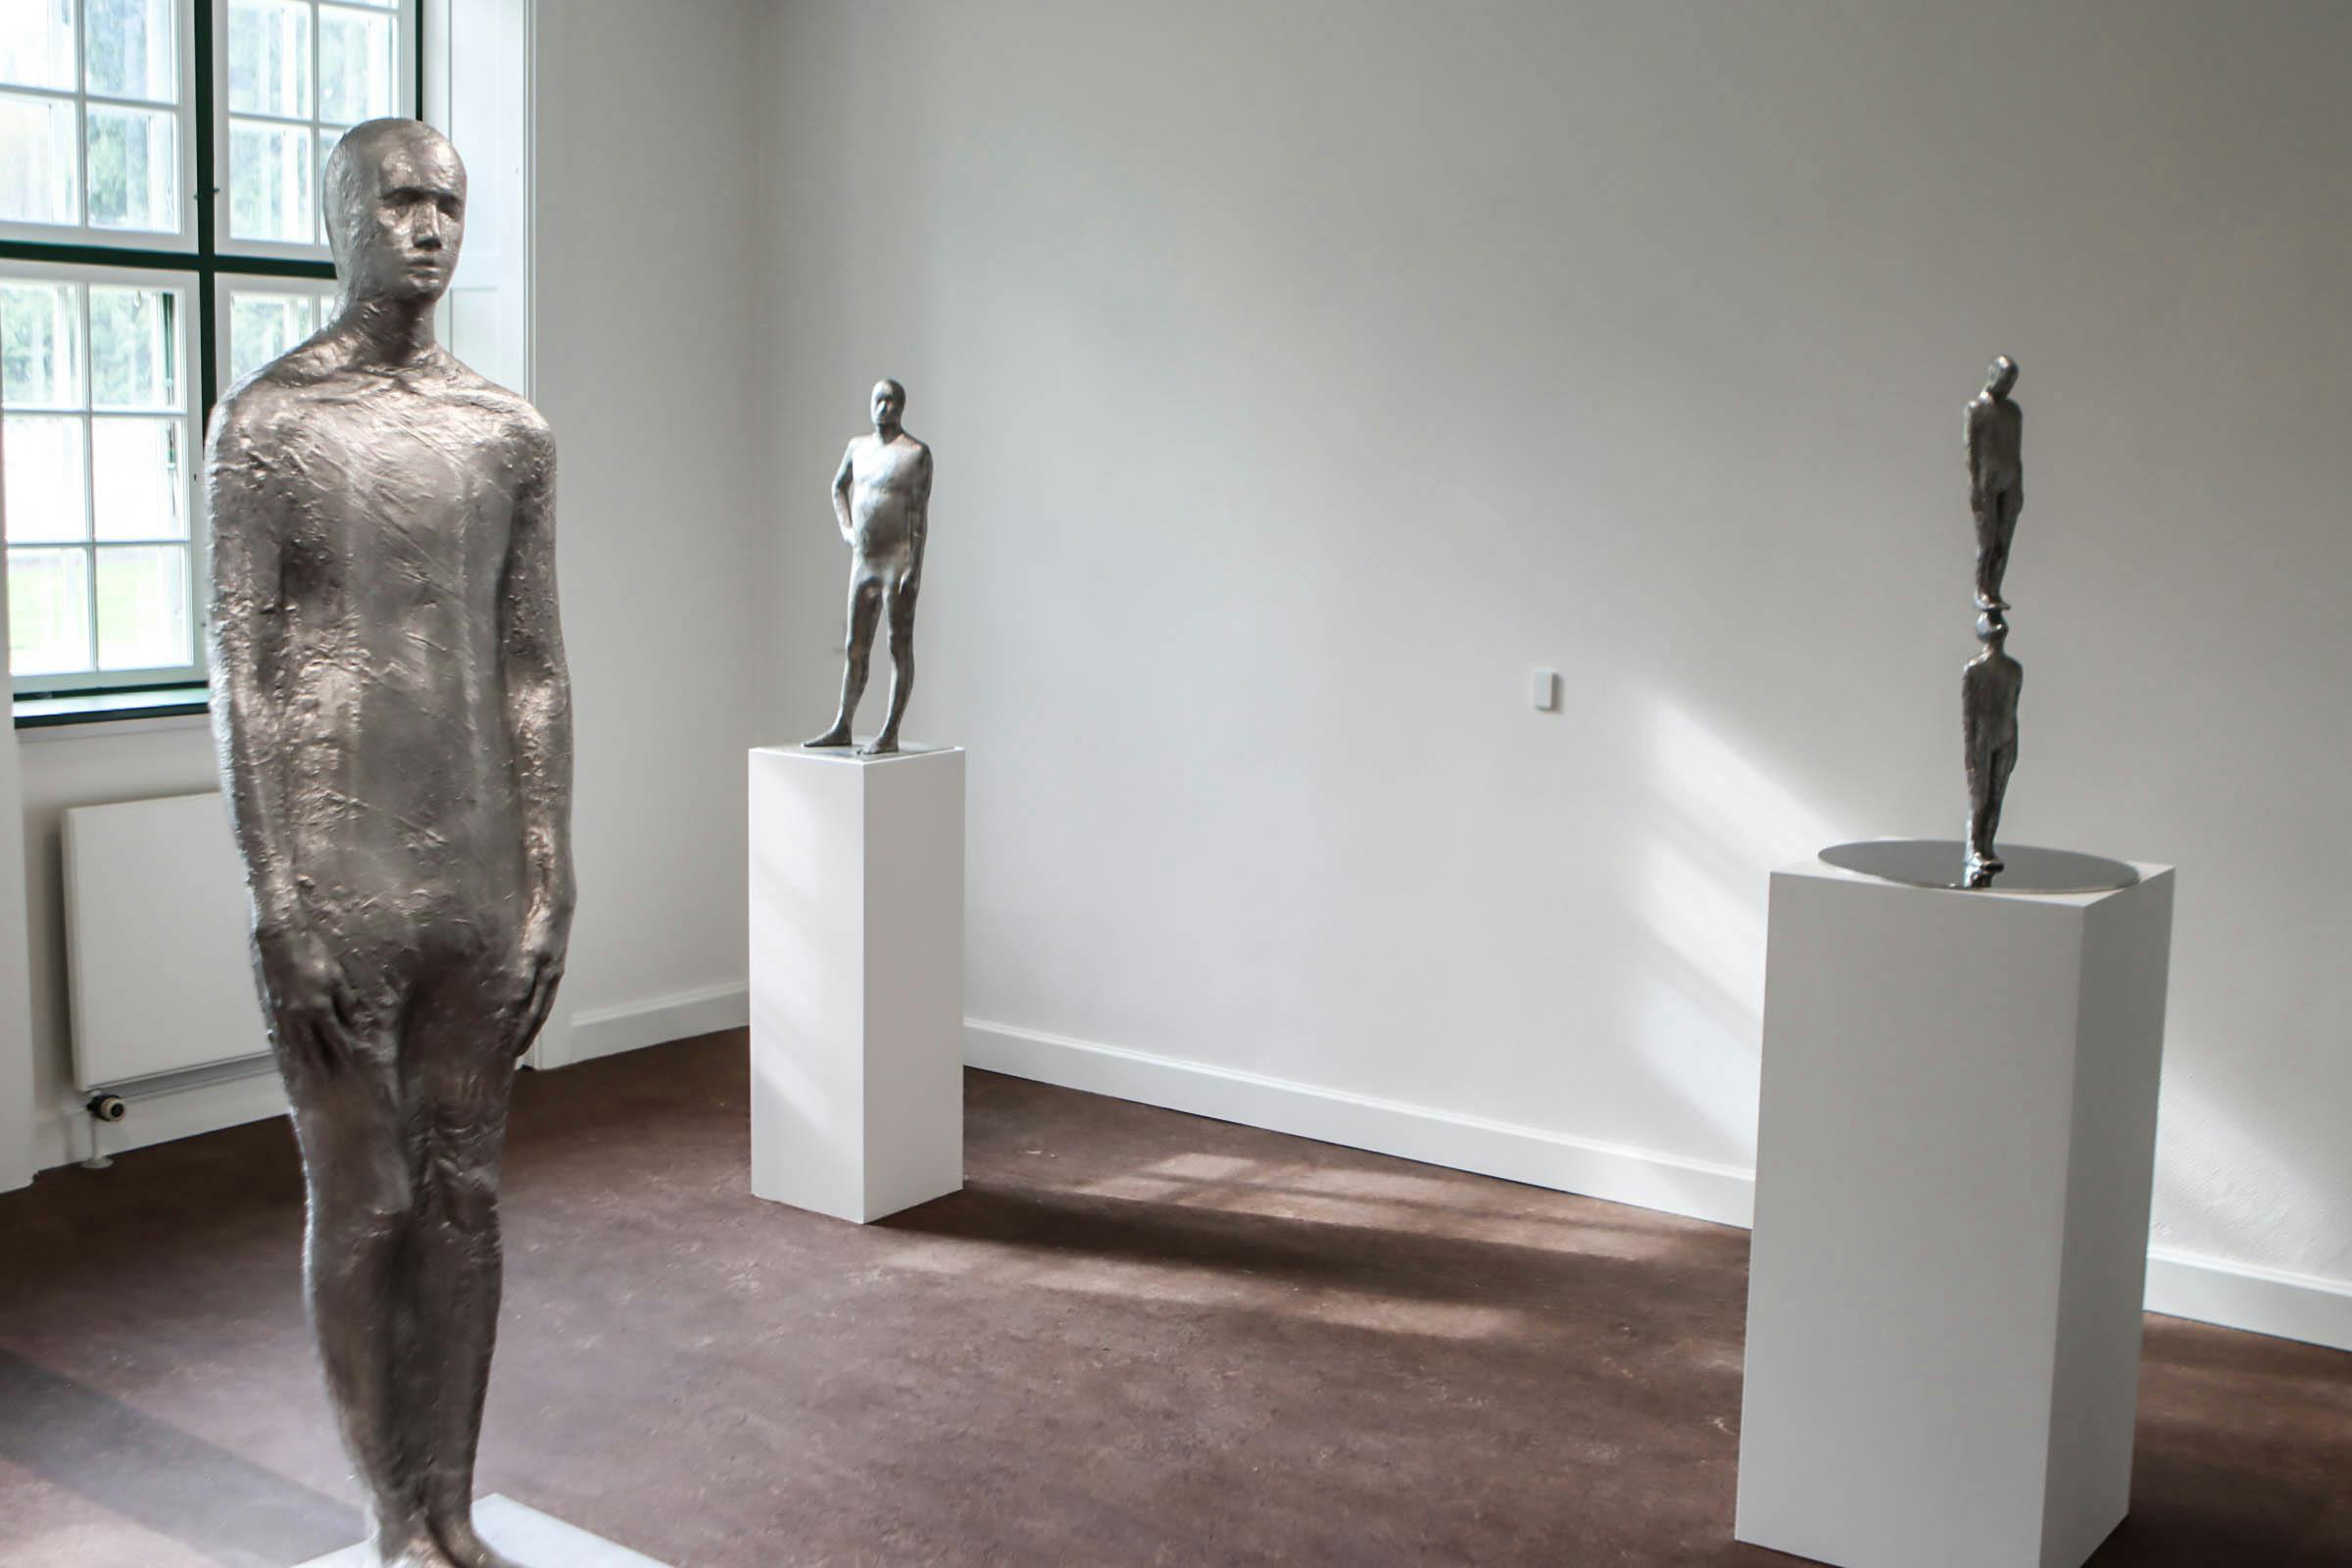 The Augustenborg_Project, Galleri Christoffer Egelund, and The Embassy of Iceland present the HUMAN exhibition by renowned Icelandic sculptor Steinunn Thórarinsdóttir. 